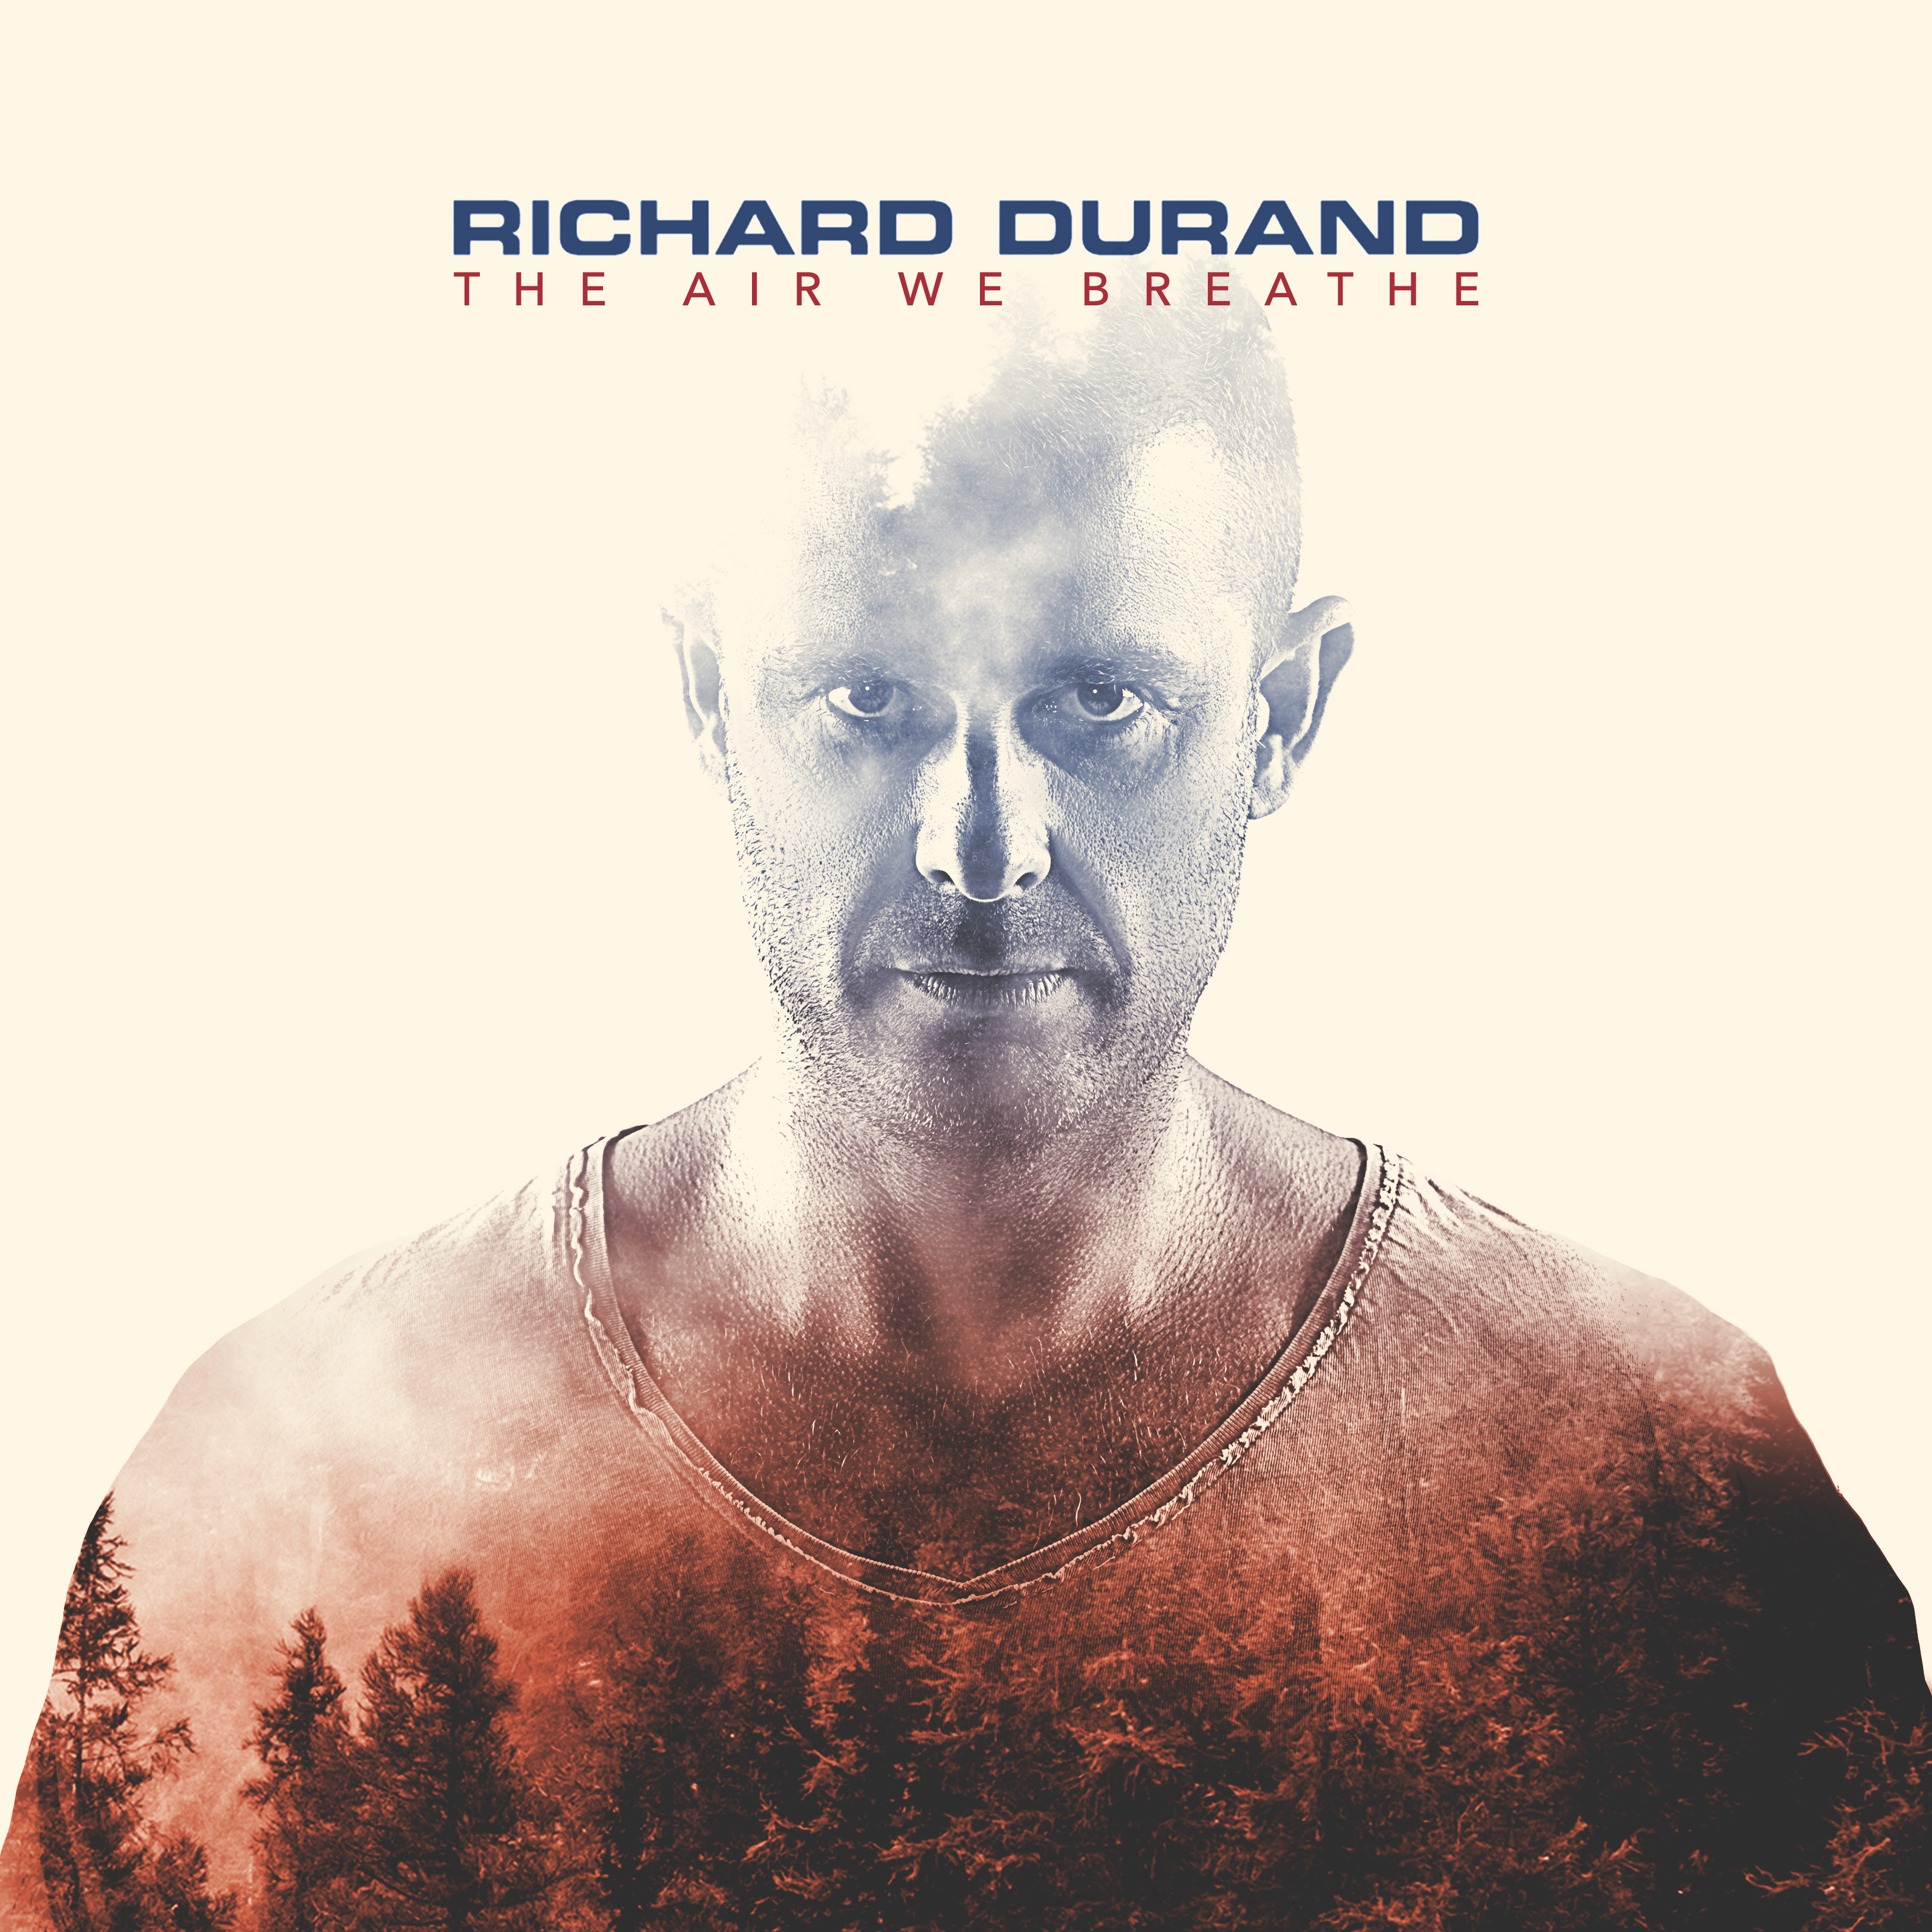 The Sacred Vine (Richard Durand Remix)